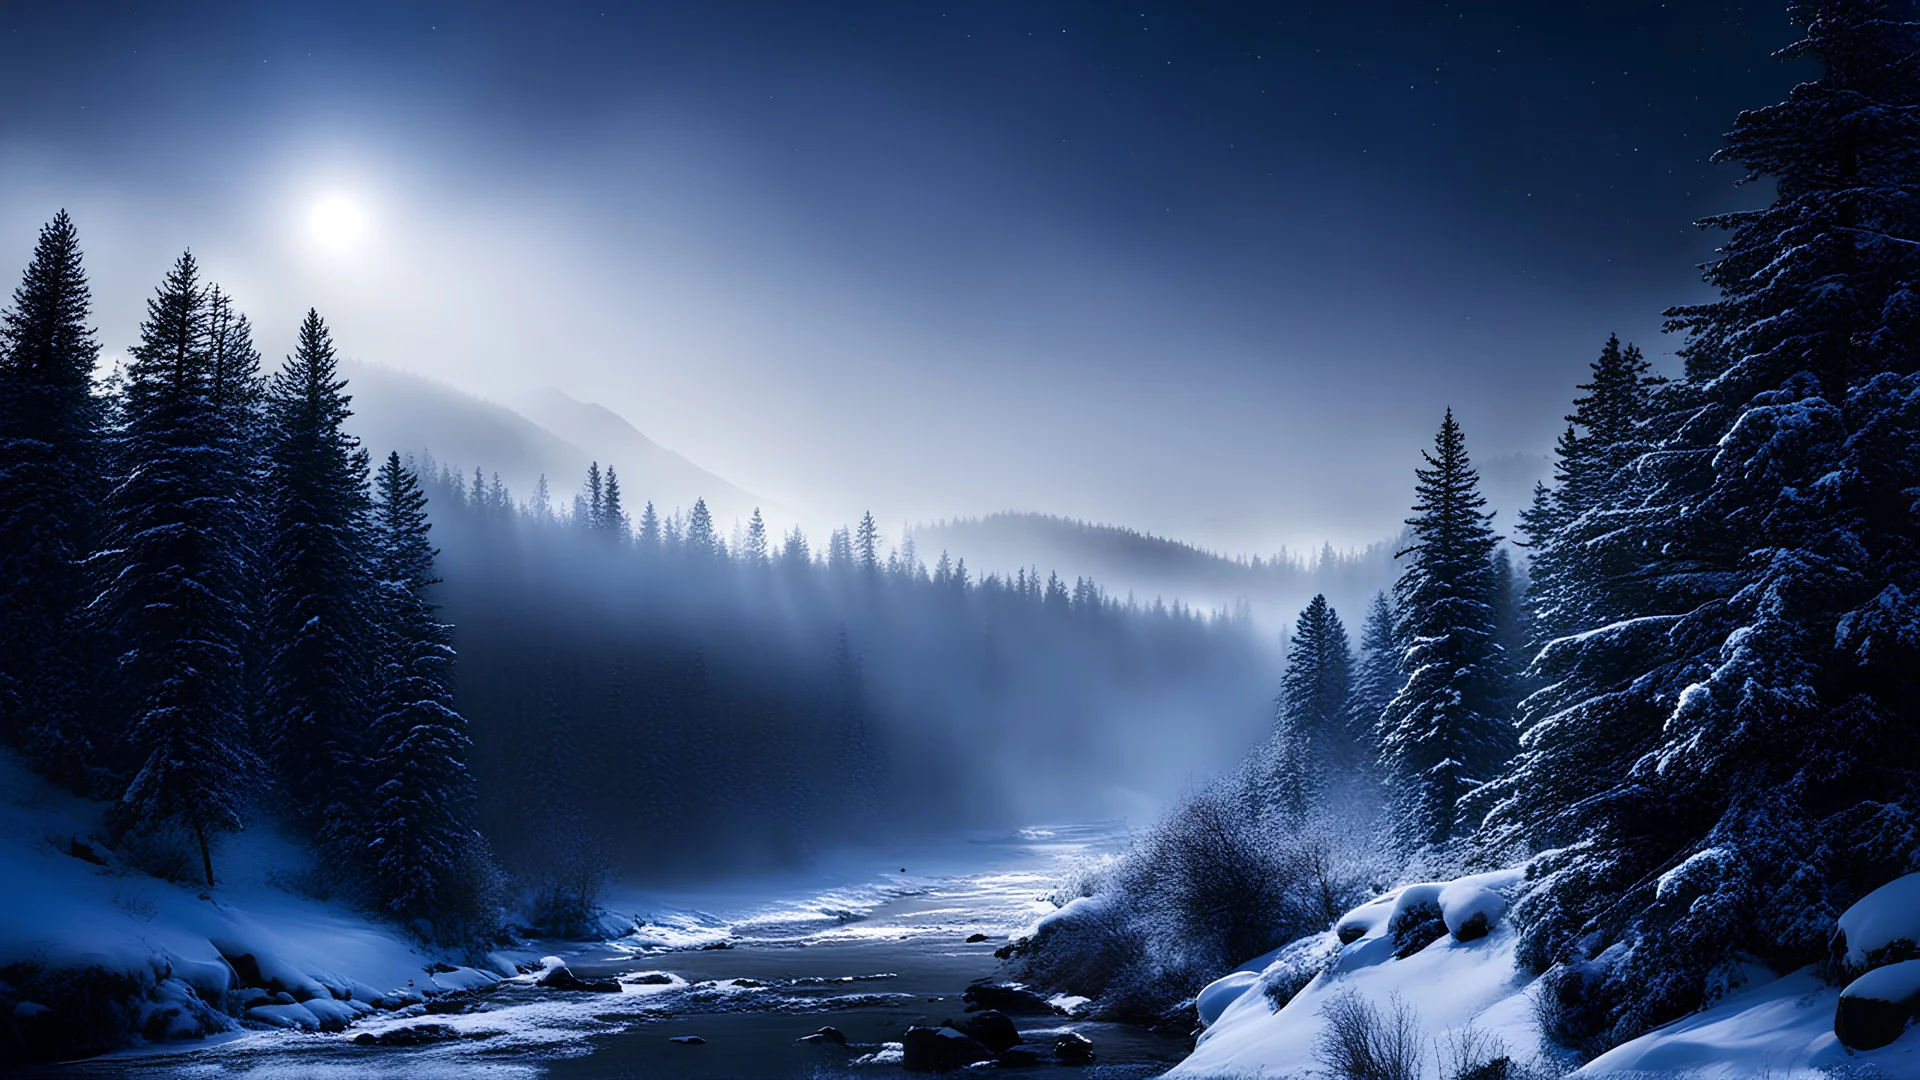 Valley,Night sky,fir forrest scenery,creek,valley,heavy mist,mist shadows,tree,nature,night,snow,fir tree,holy night